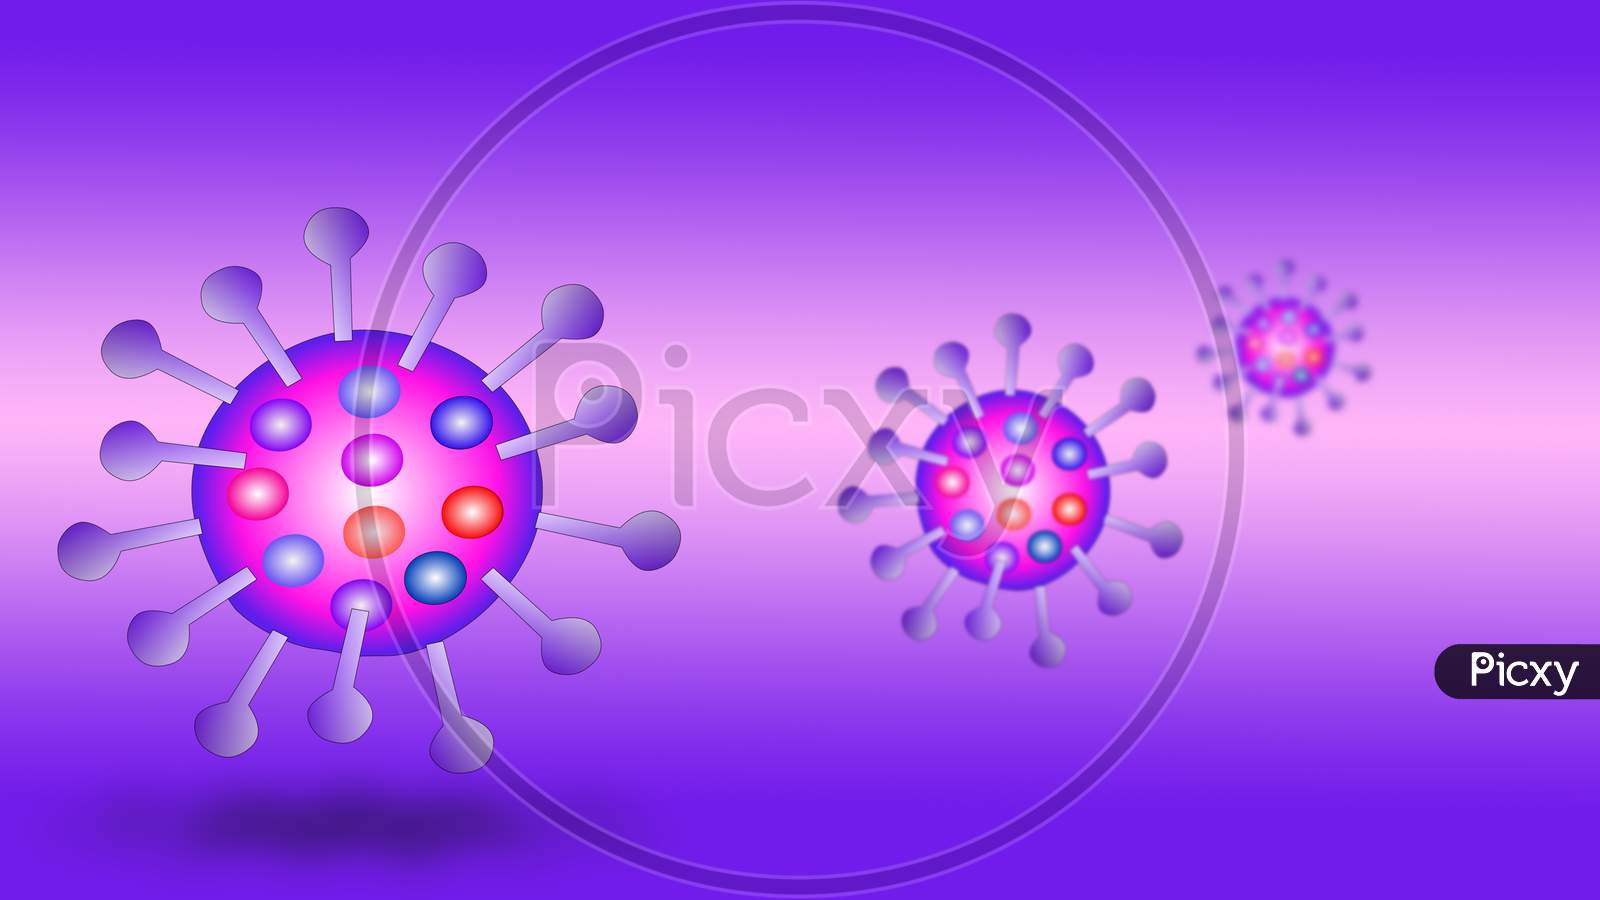 An illustration of Covid-19 or corona virus